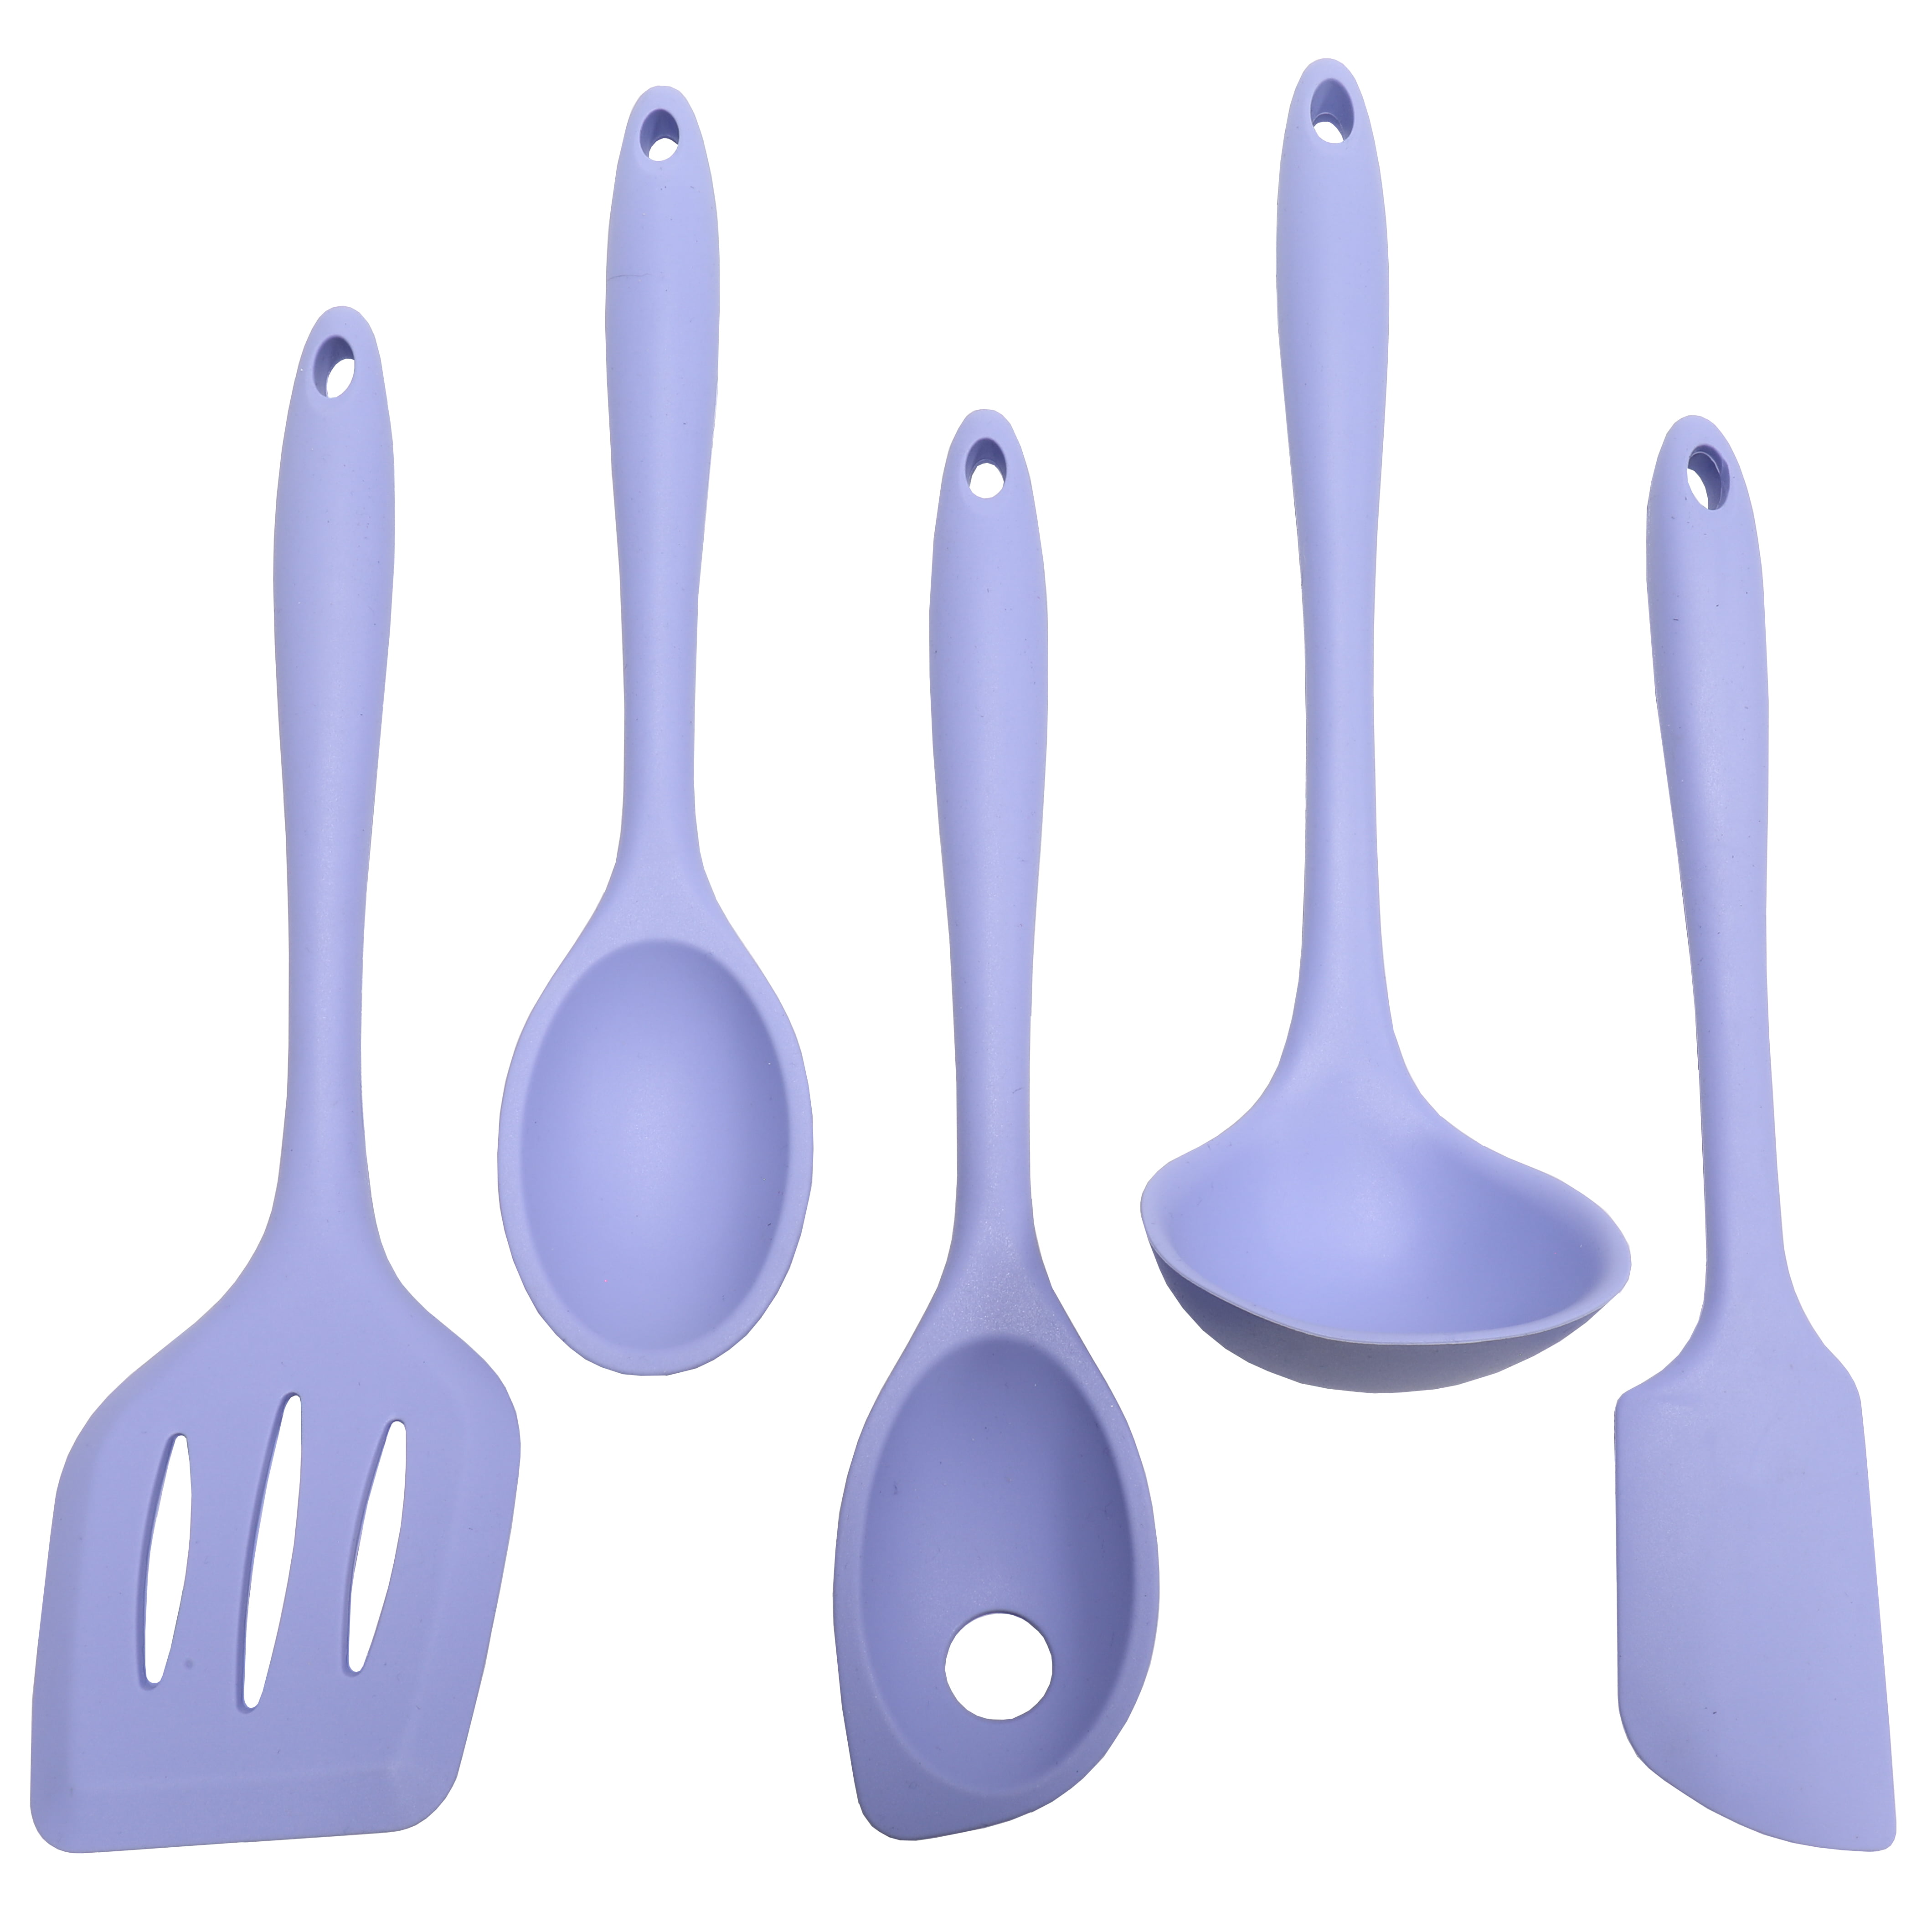 Utensilios de cocina de silicona utensilios de cocina Set – 7 – Juego de  utensilios de cocina de sil…Ver más Utensilios de cocina de silicona